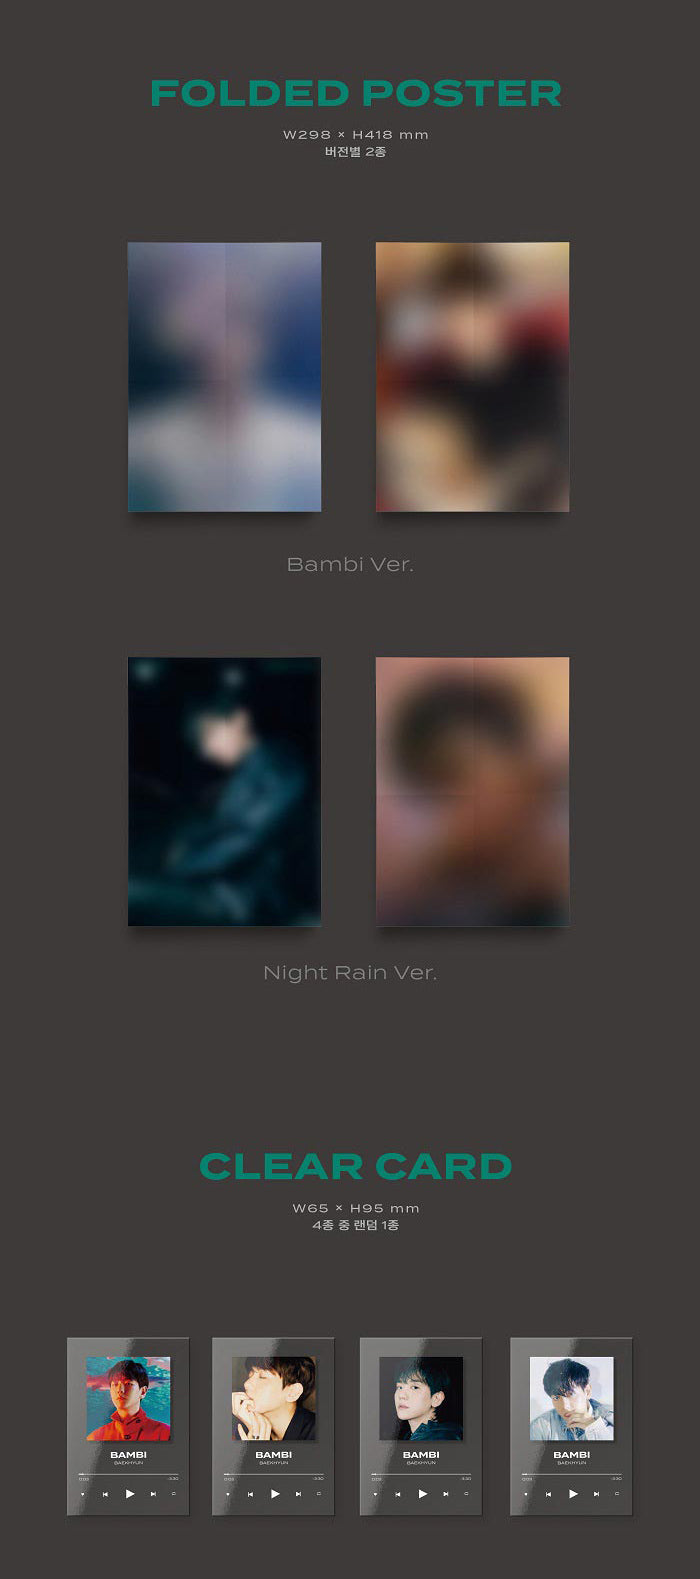 EXO: Baek Hyun Mini Album Vol. 3 - Bambi (Photobook Version) (Random Version)